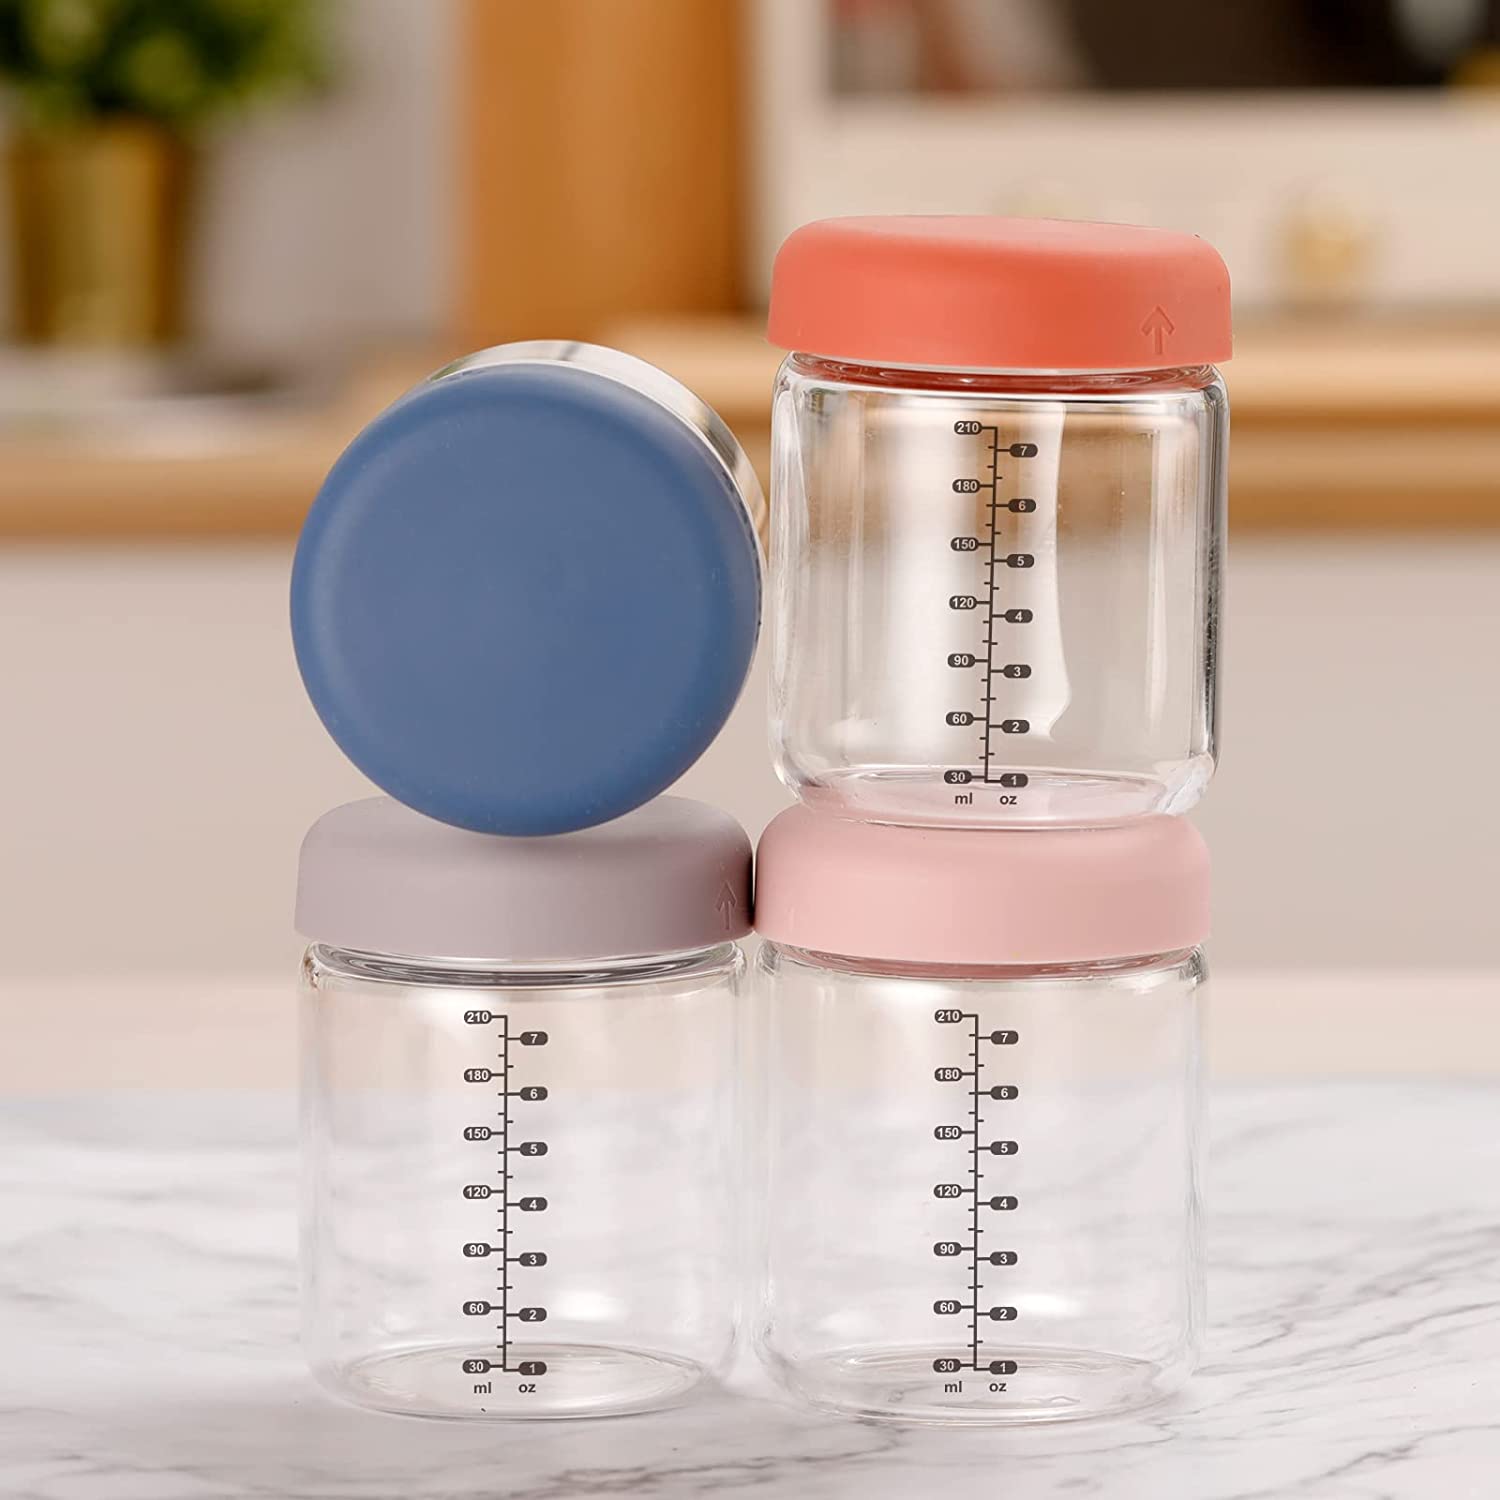 Solid Baby Food Bottle Milk Powder Box Portable Baby Infant Powder Milk  Storage Dispenser Container Travel